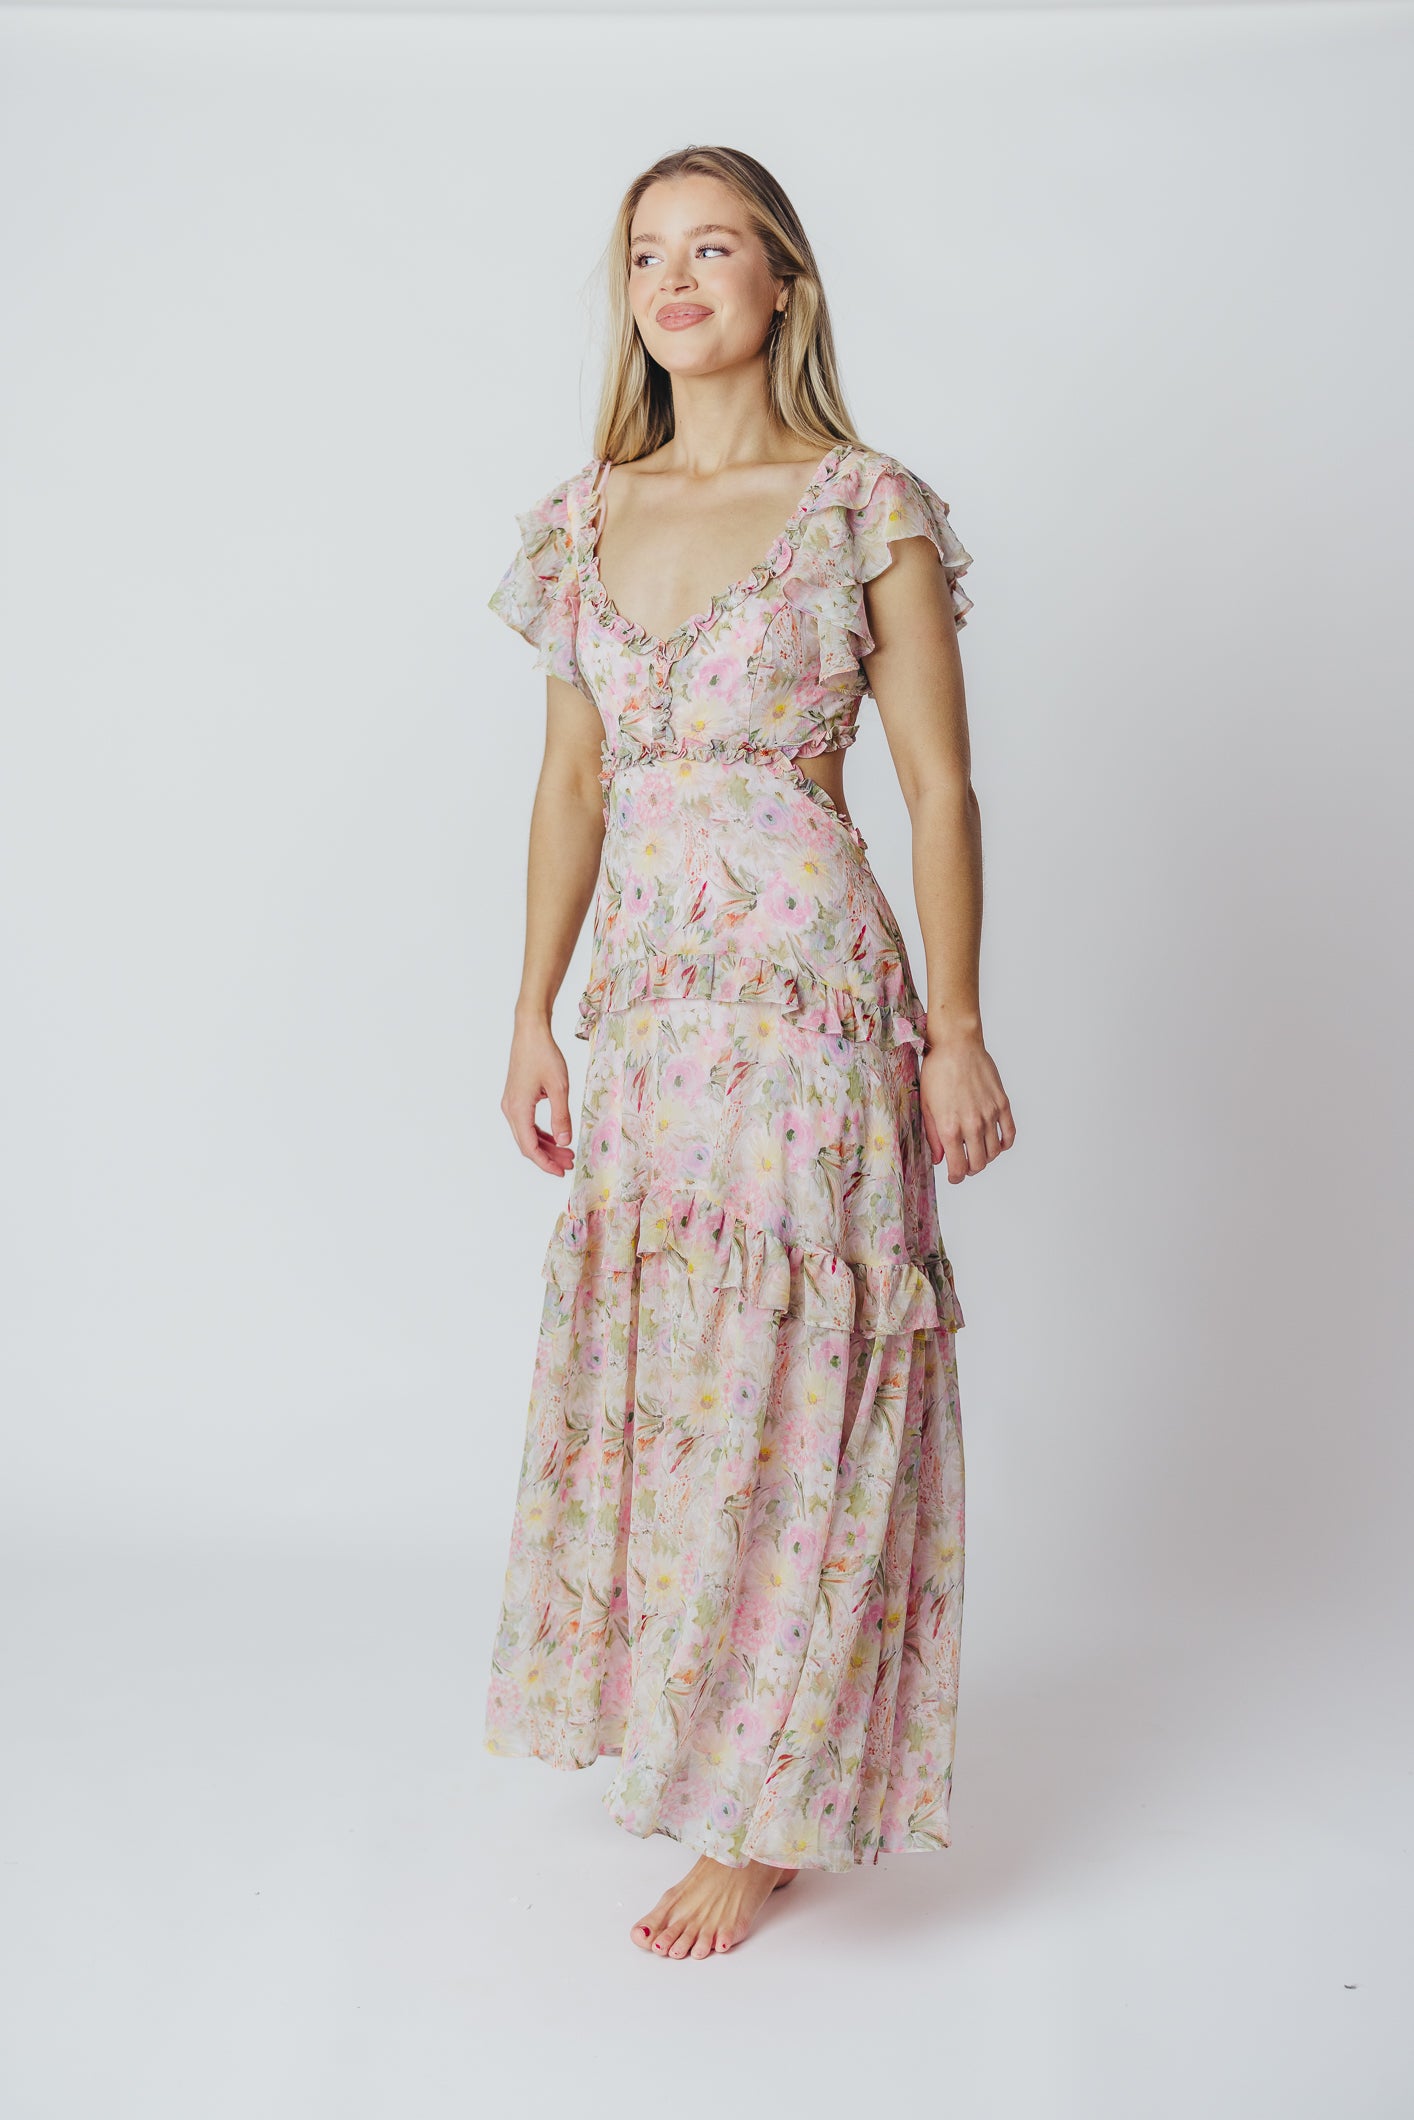 ASTR Millie Maxi Dress in Pink Floral